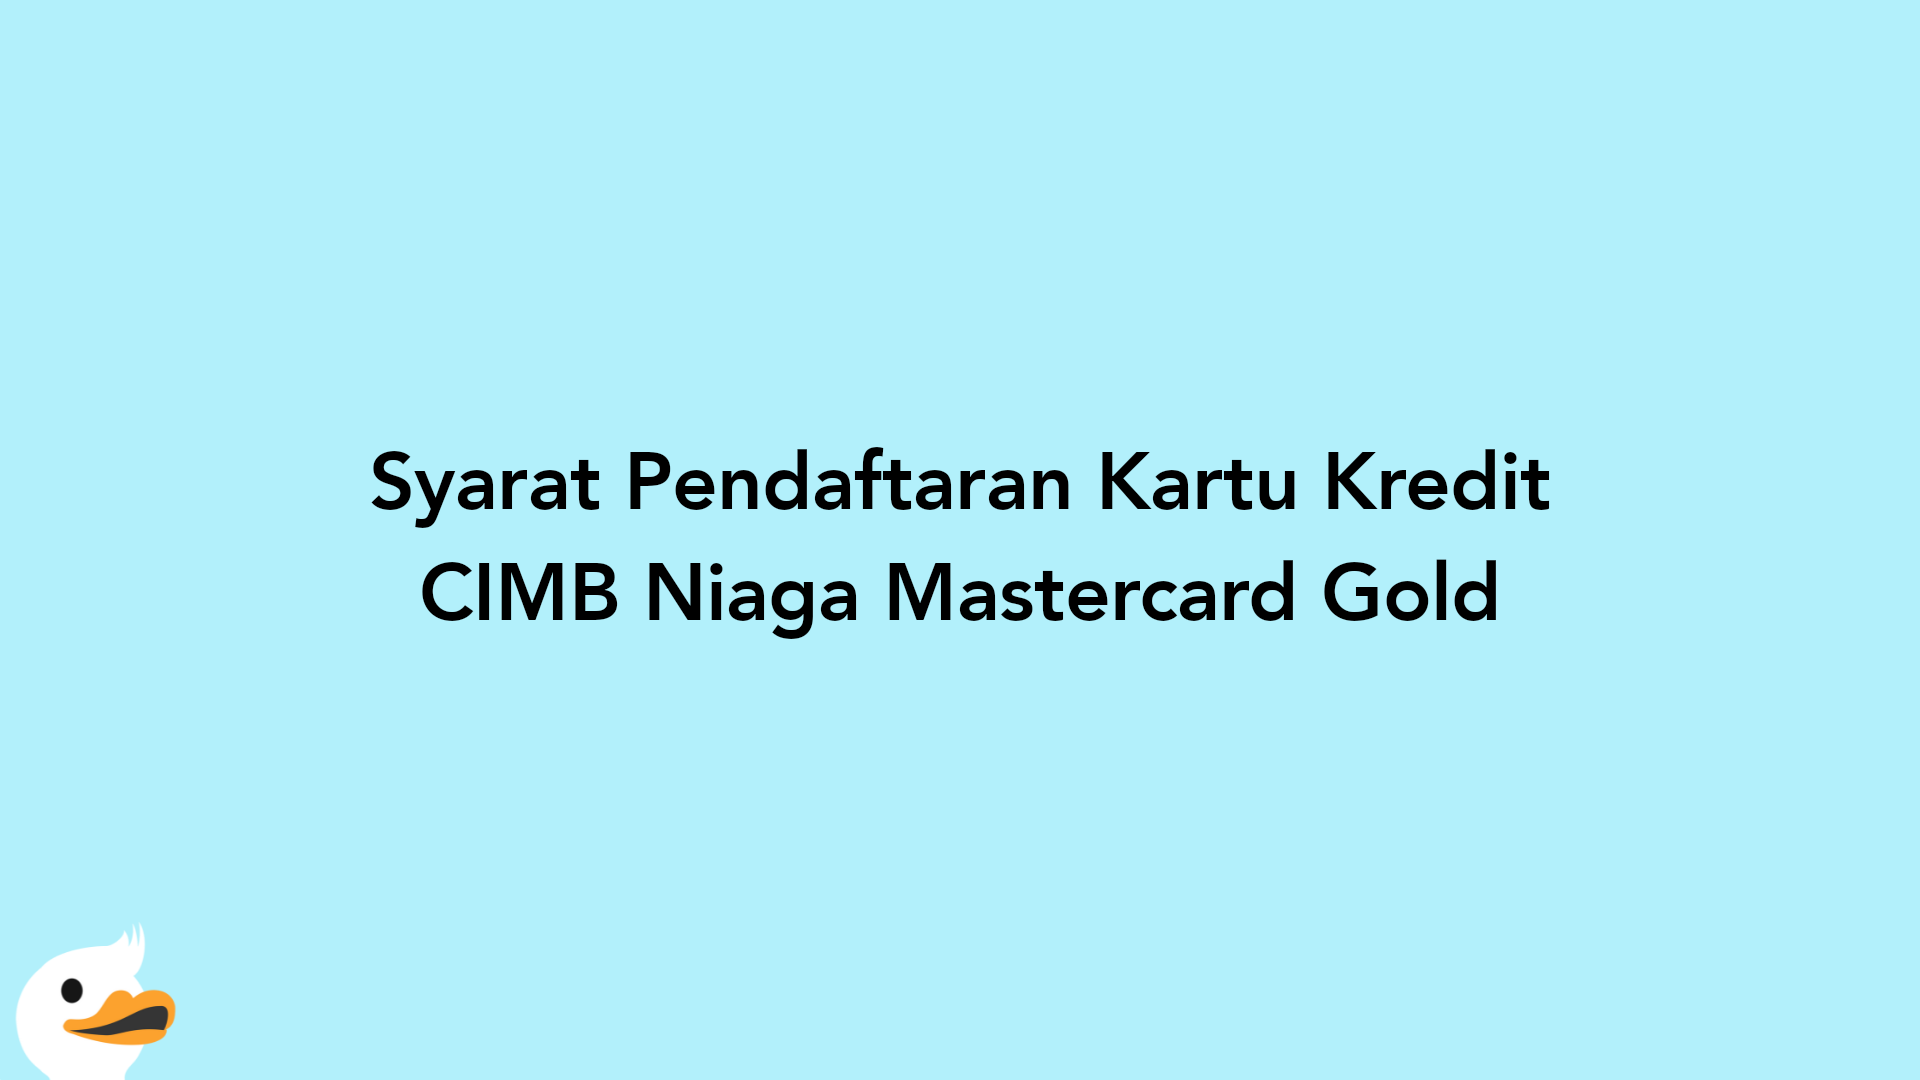 Syarat Pendaftaran Kartu Kredit CIMB Niaga Mastercard Gold